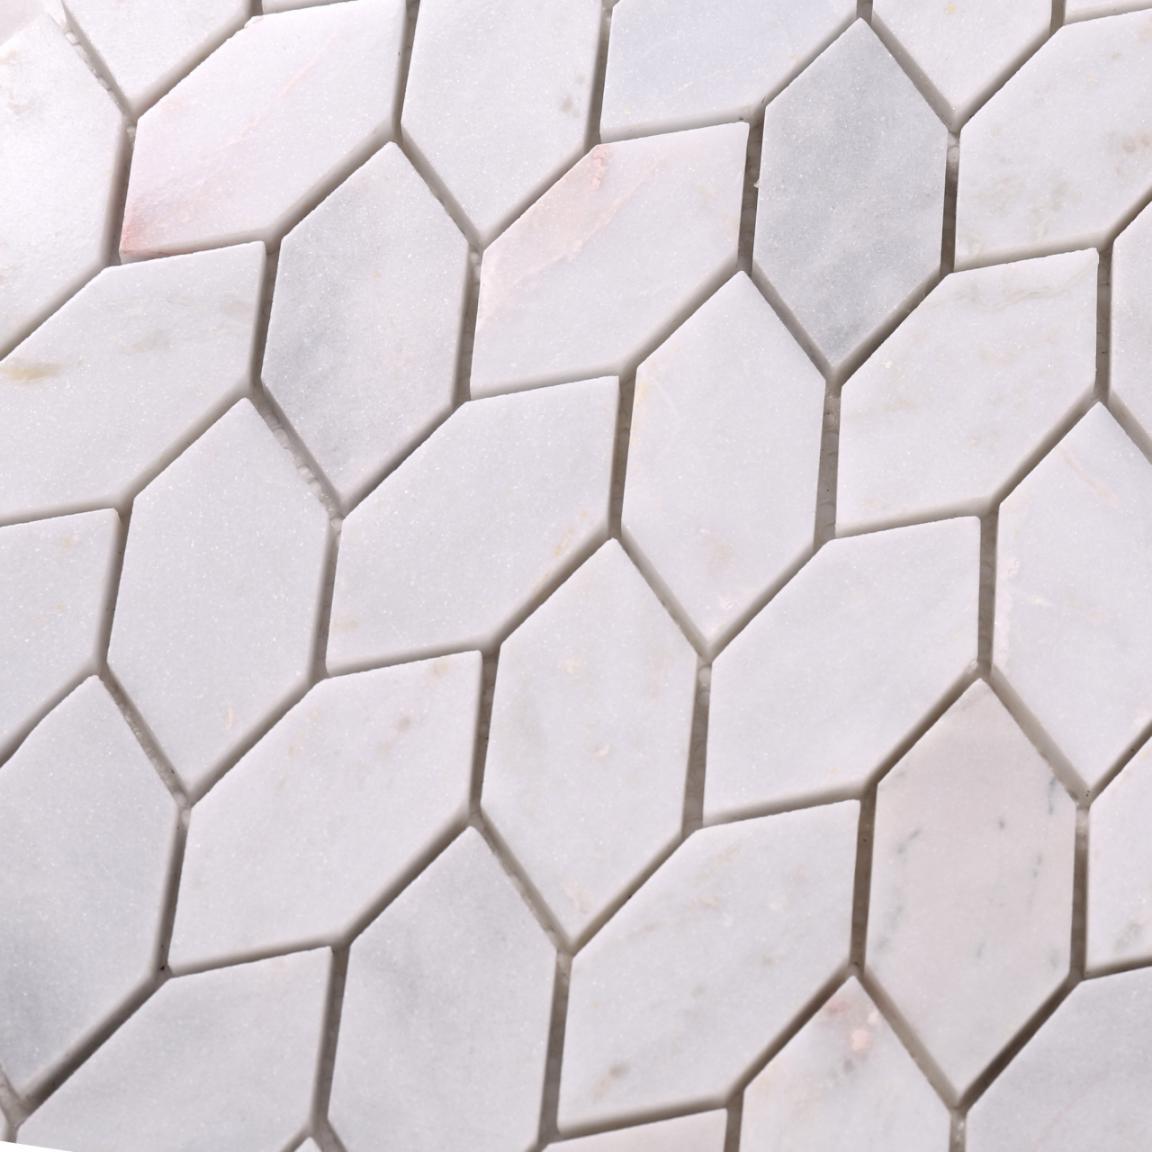 HSC97 Best Price Leaf Shape Natural Stone Decorative Mosaic